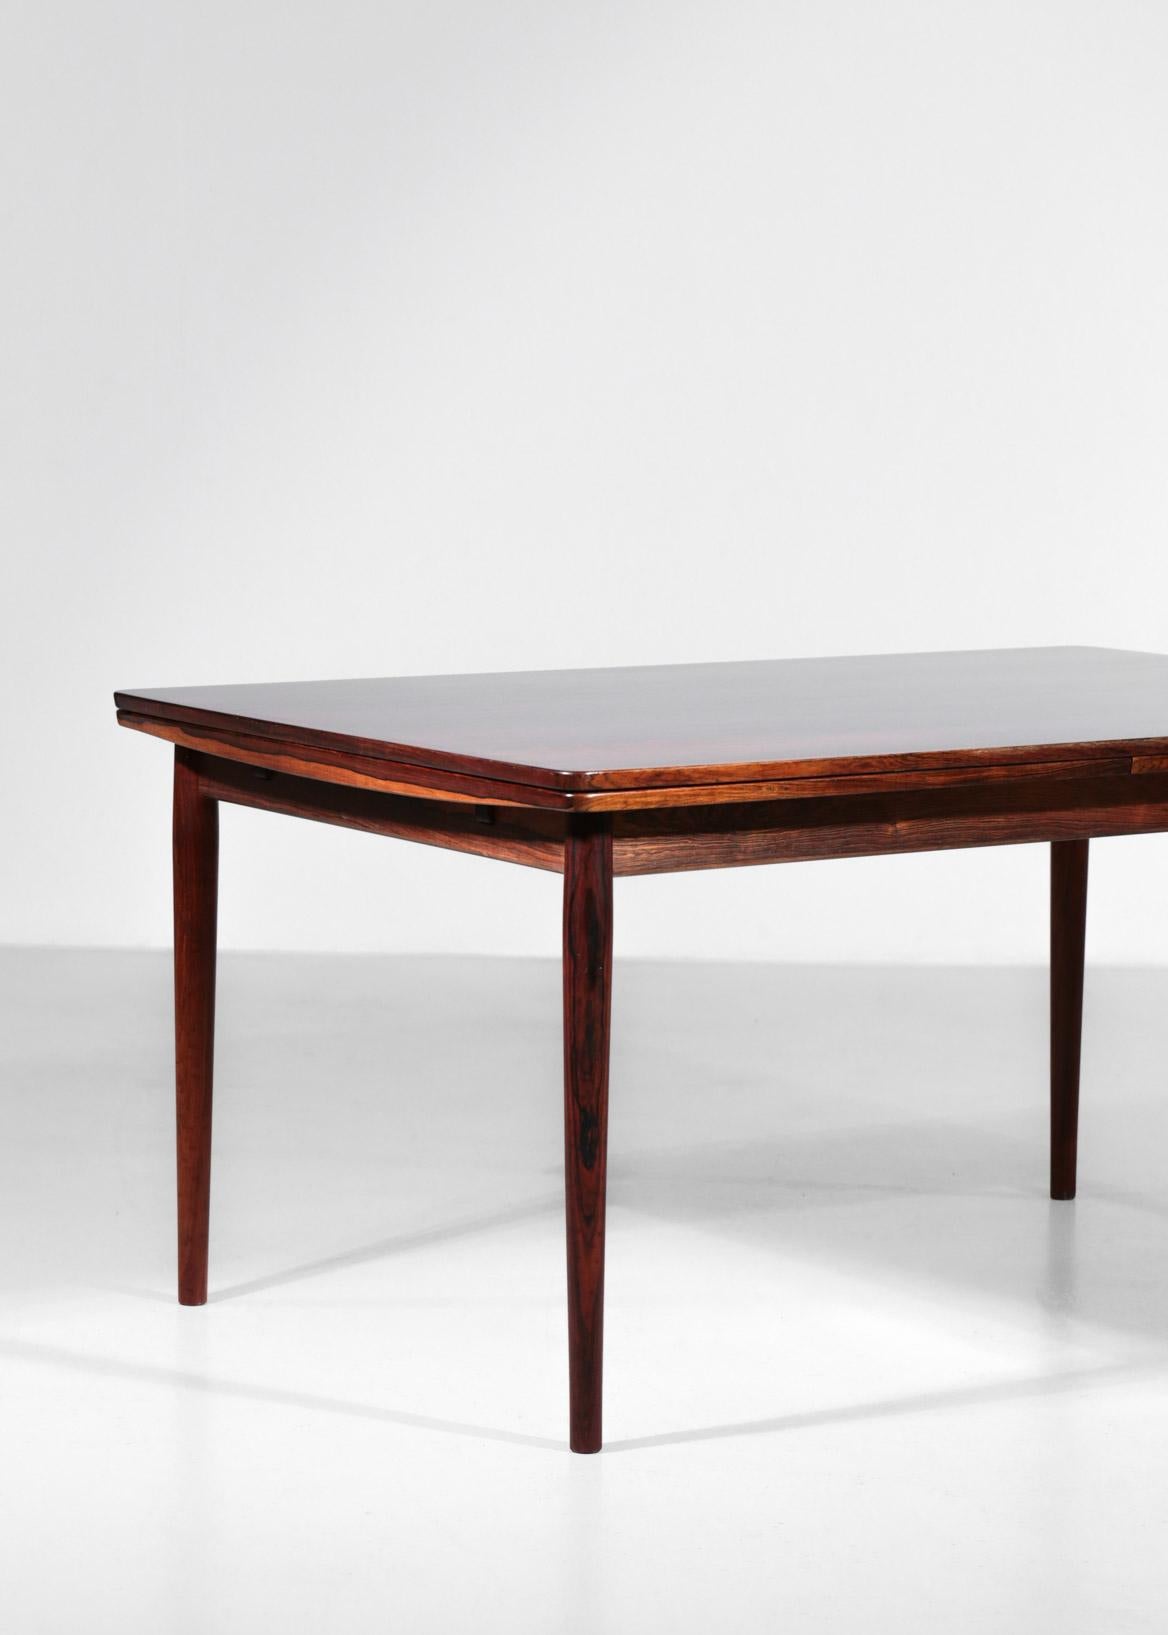 Large Arne Vodder Dining Table Danish Design Scandinavian Danish Sibast D281 For Sale 5